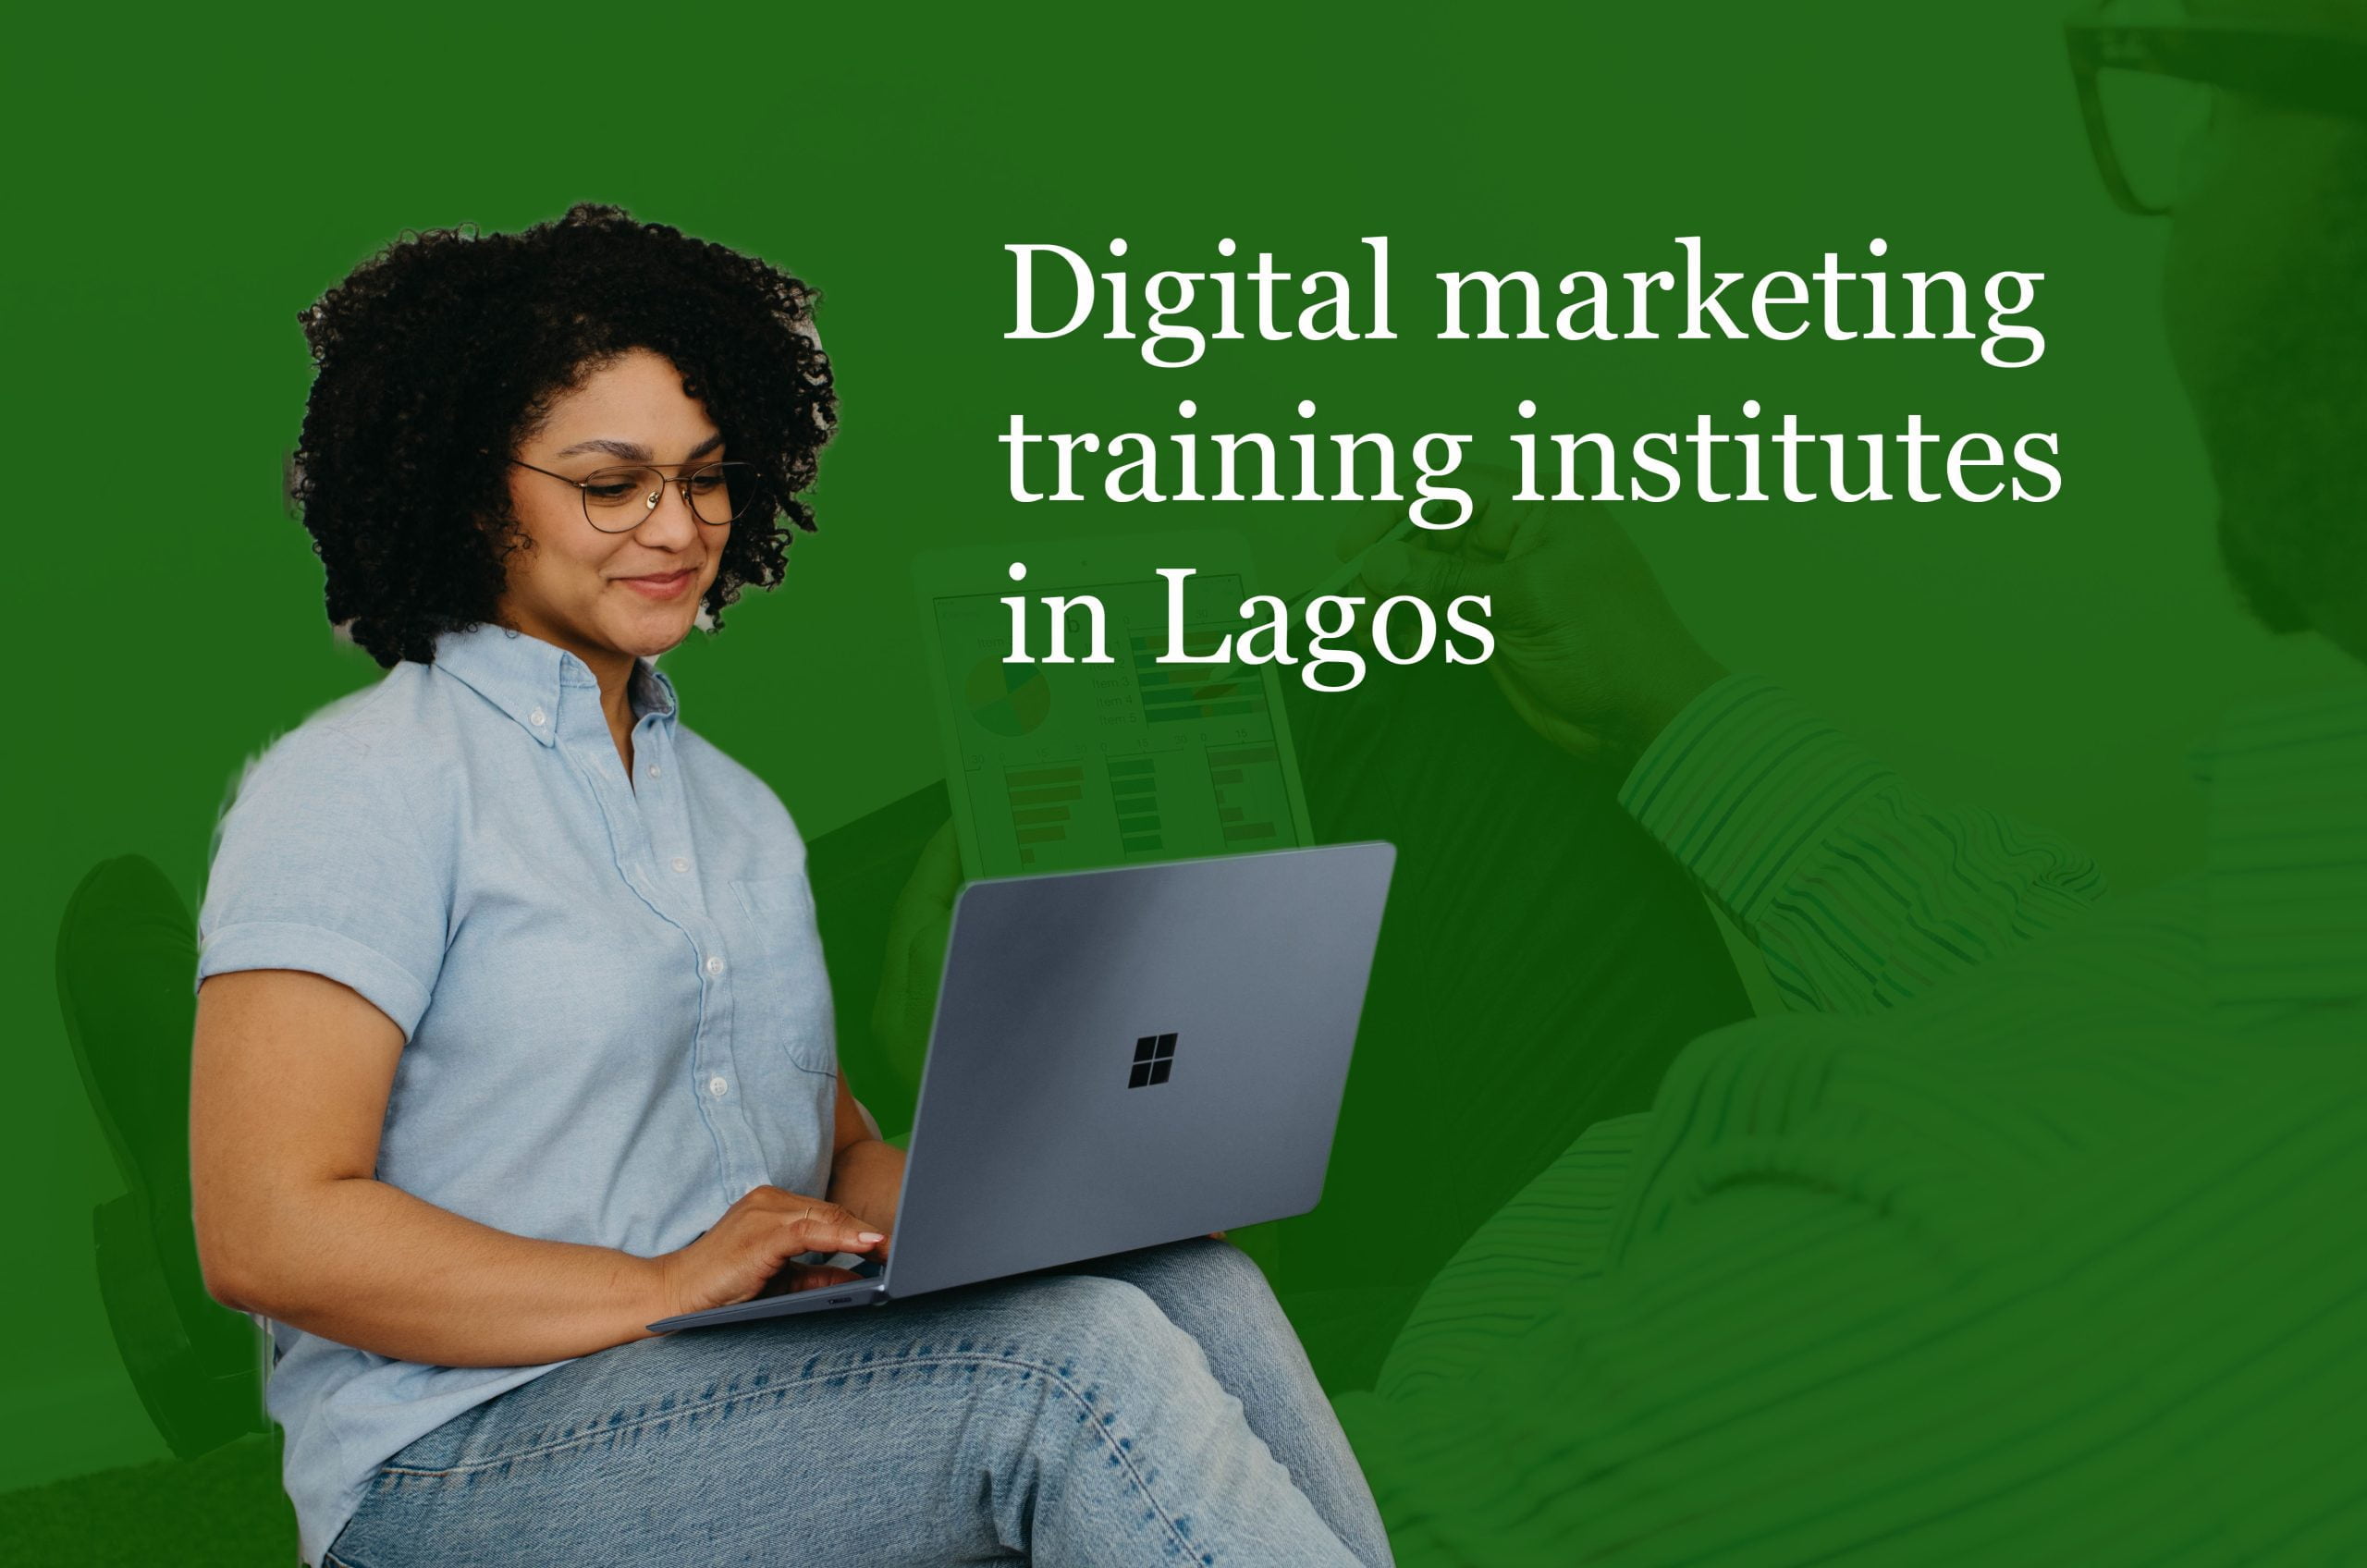 Top best digital marketing and ICT training institutes in Lagos Nigeria, Fastknowers blog.